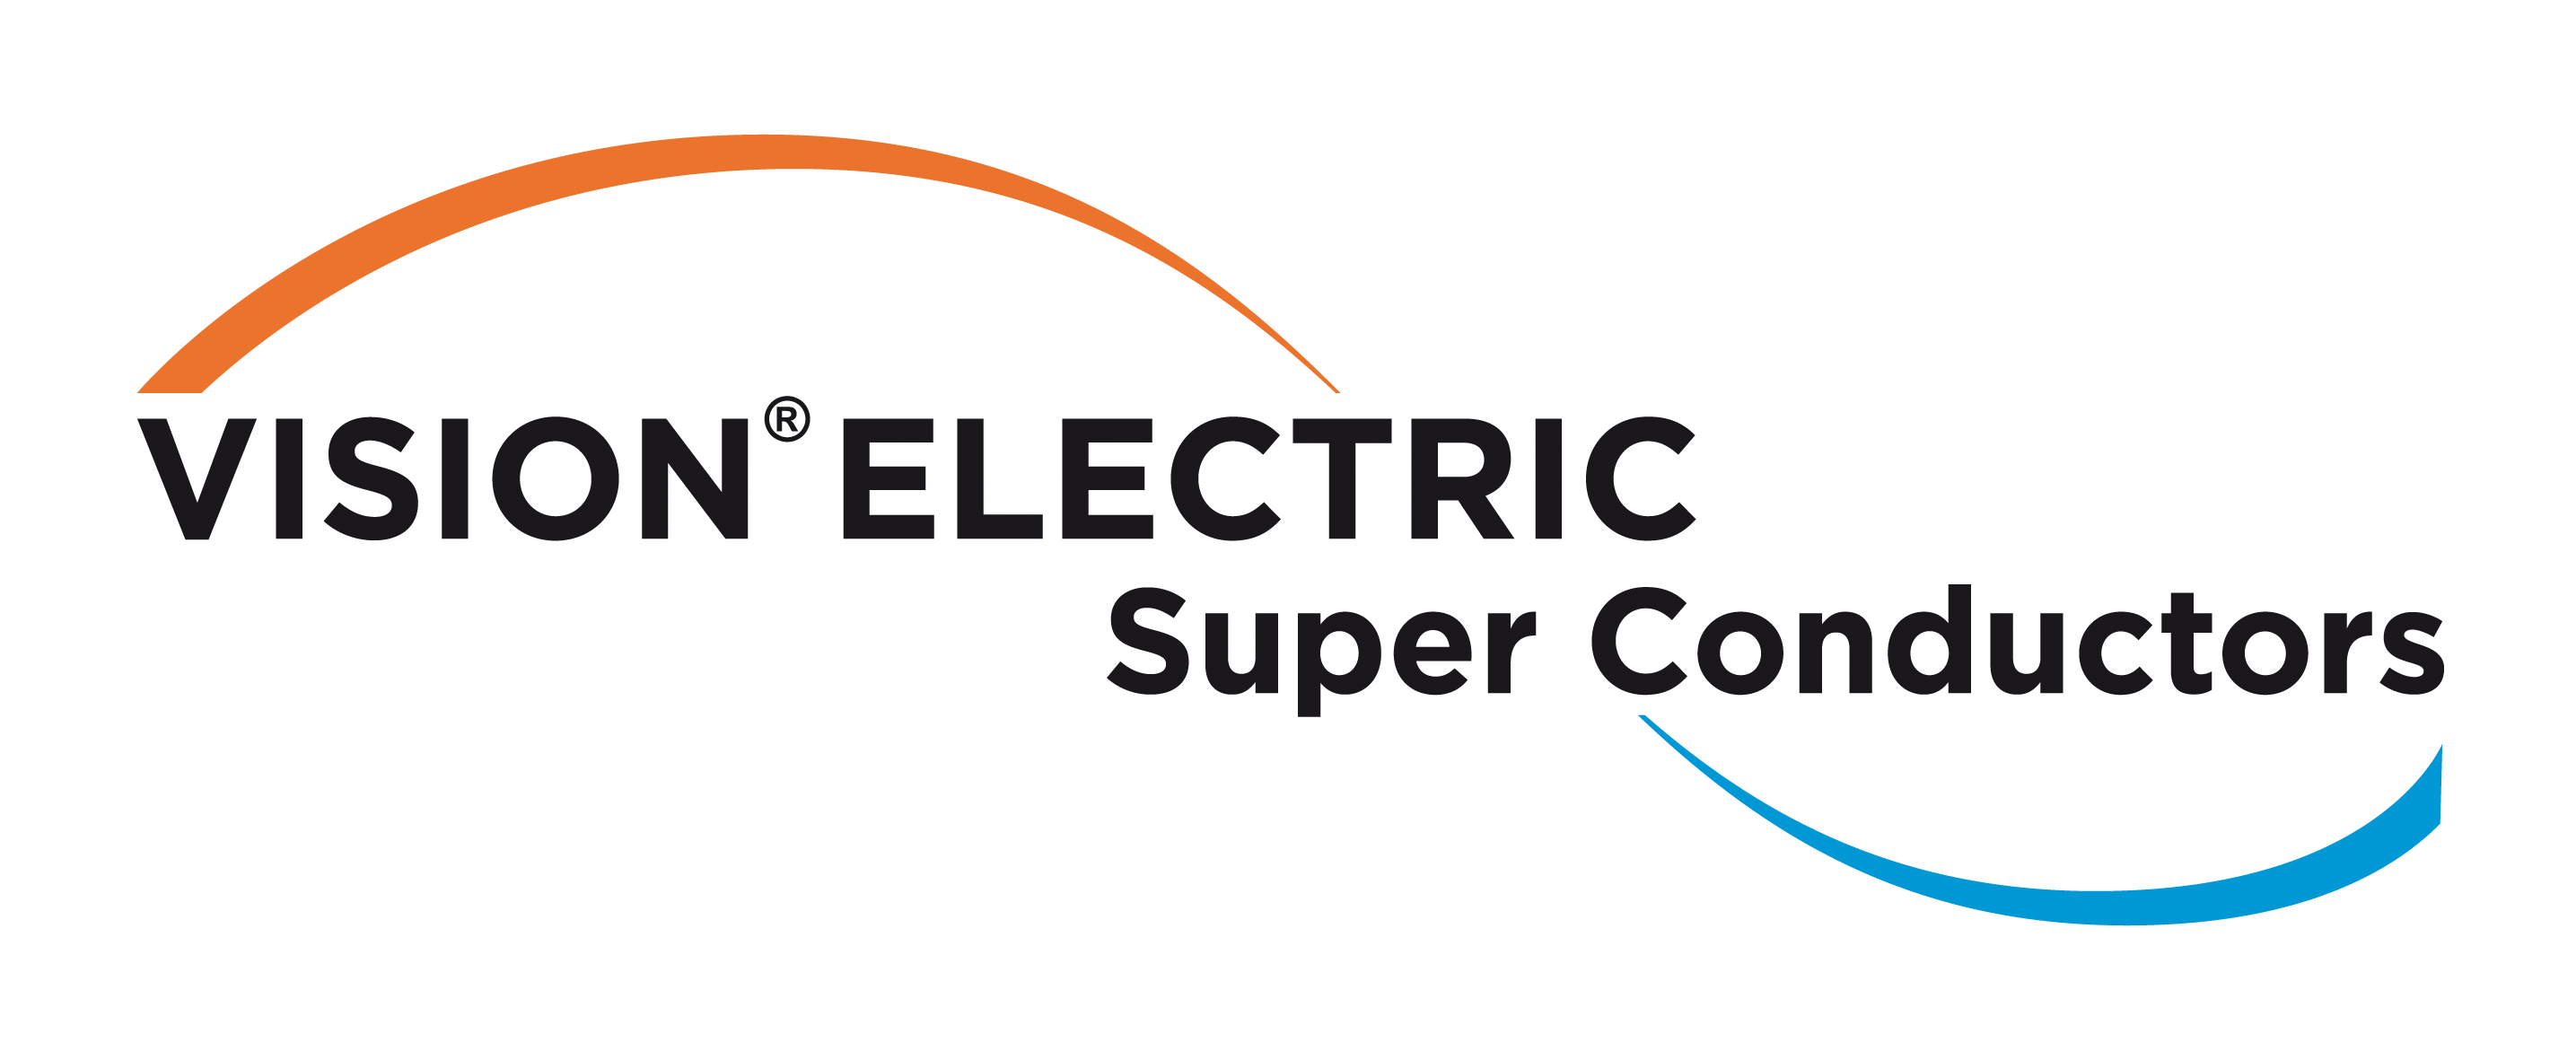 Vision Electric Super Conductors